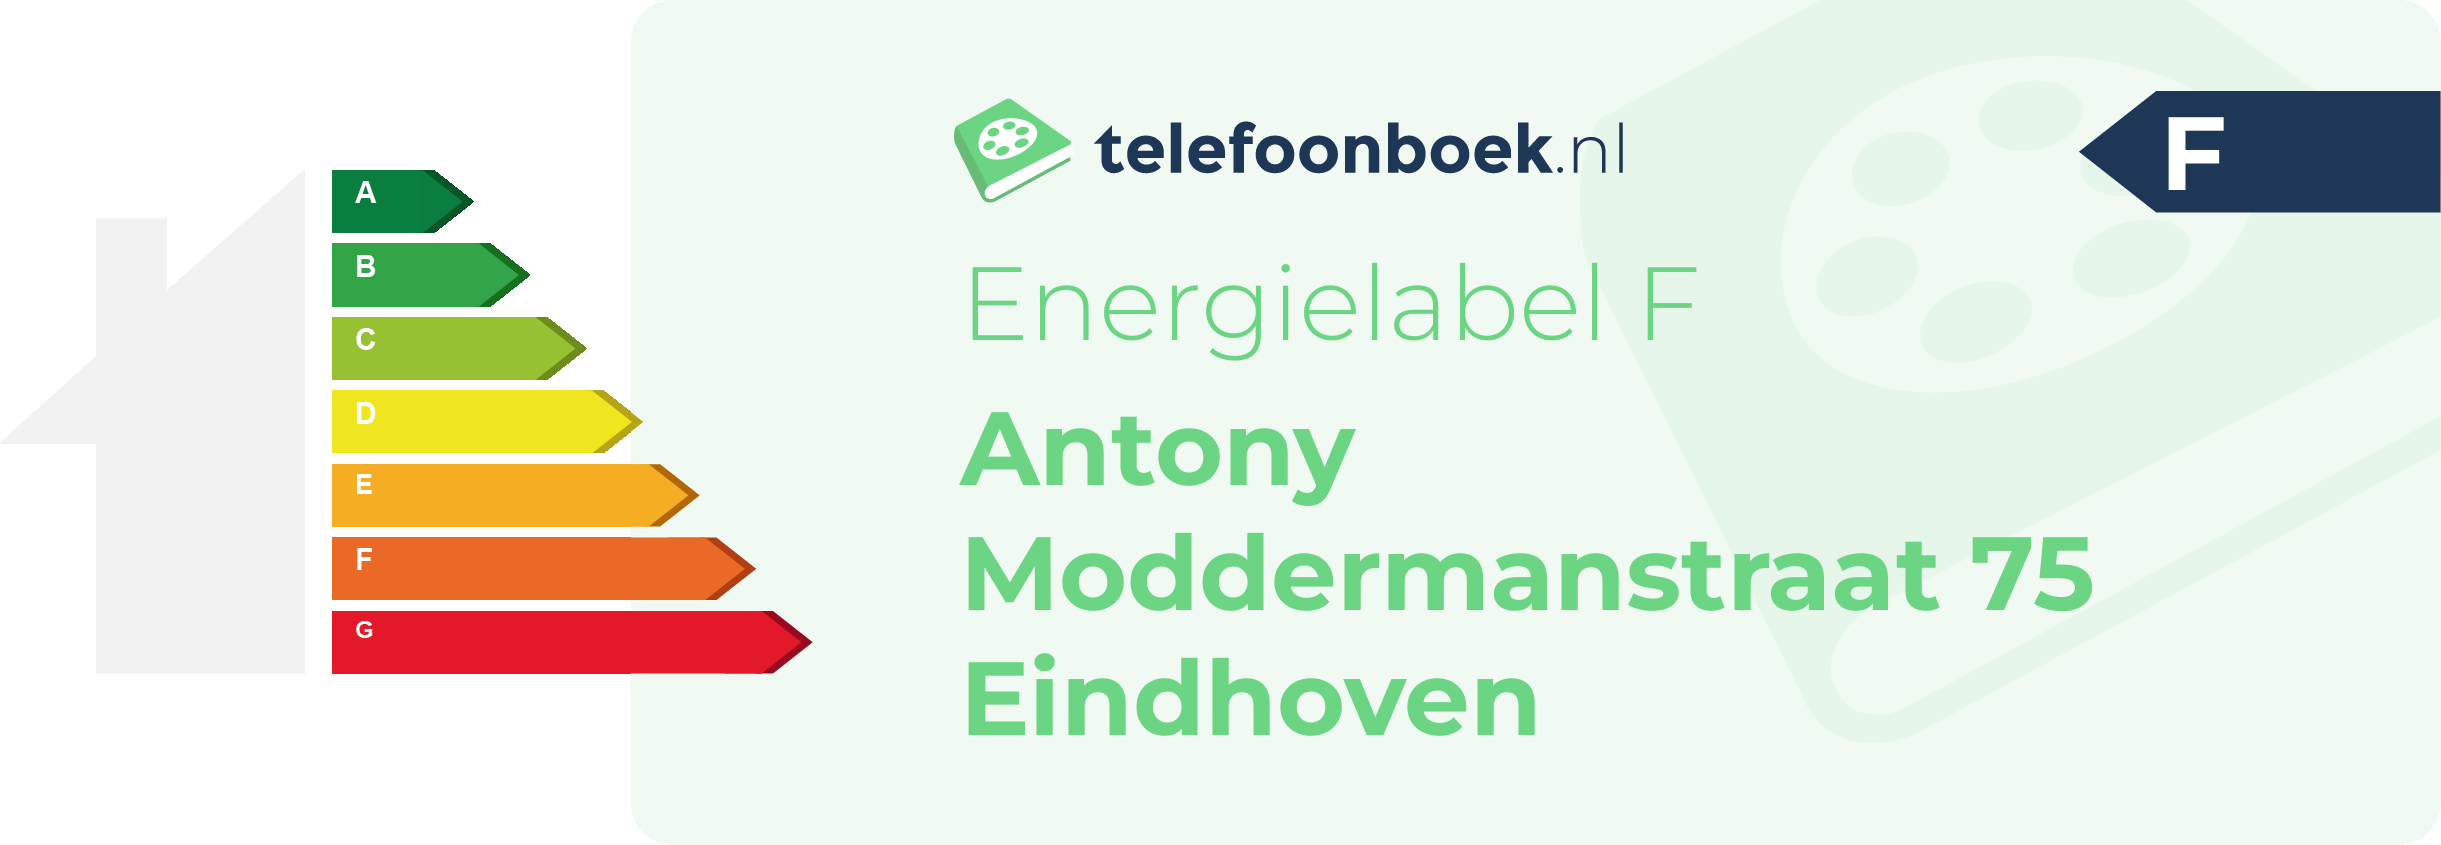 Energielabel Antony Moddermanstraat 75 Eindhoven